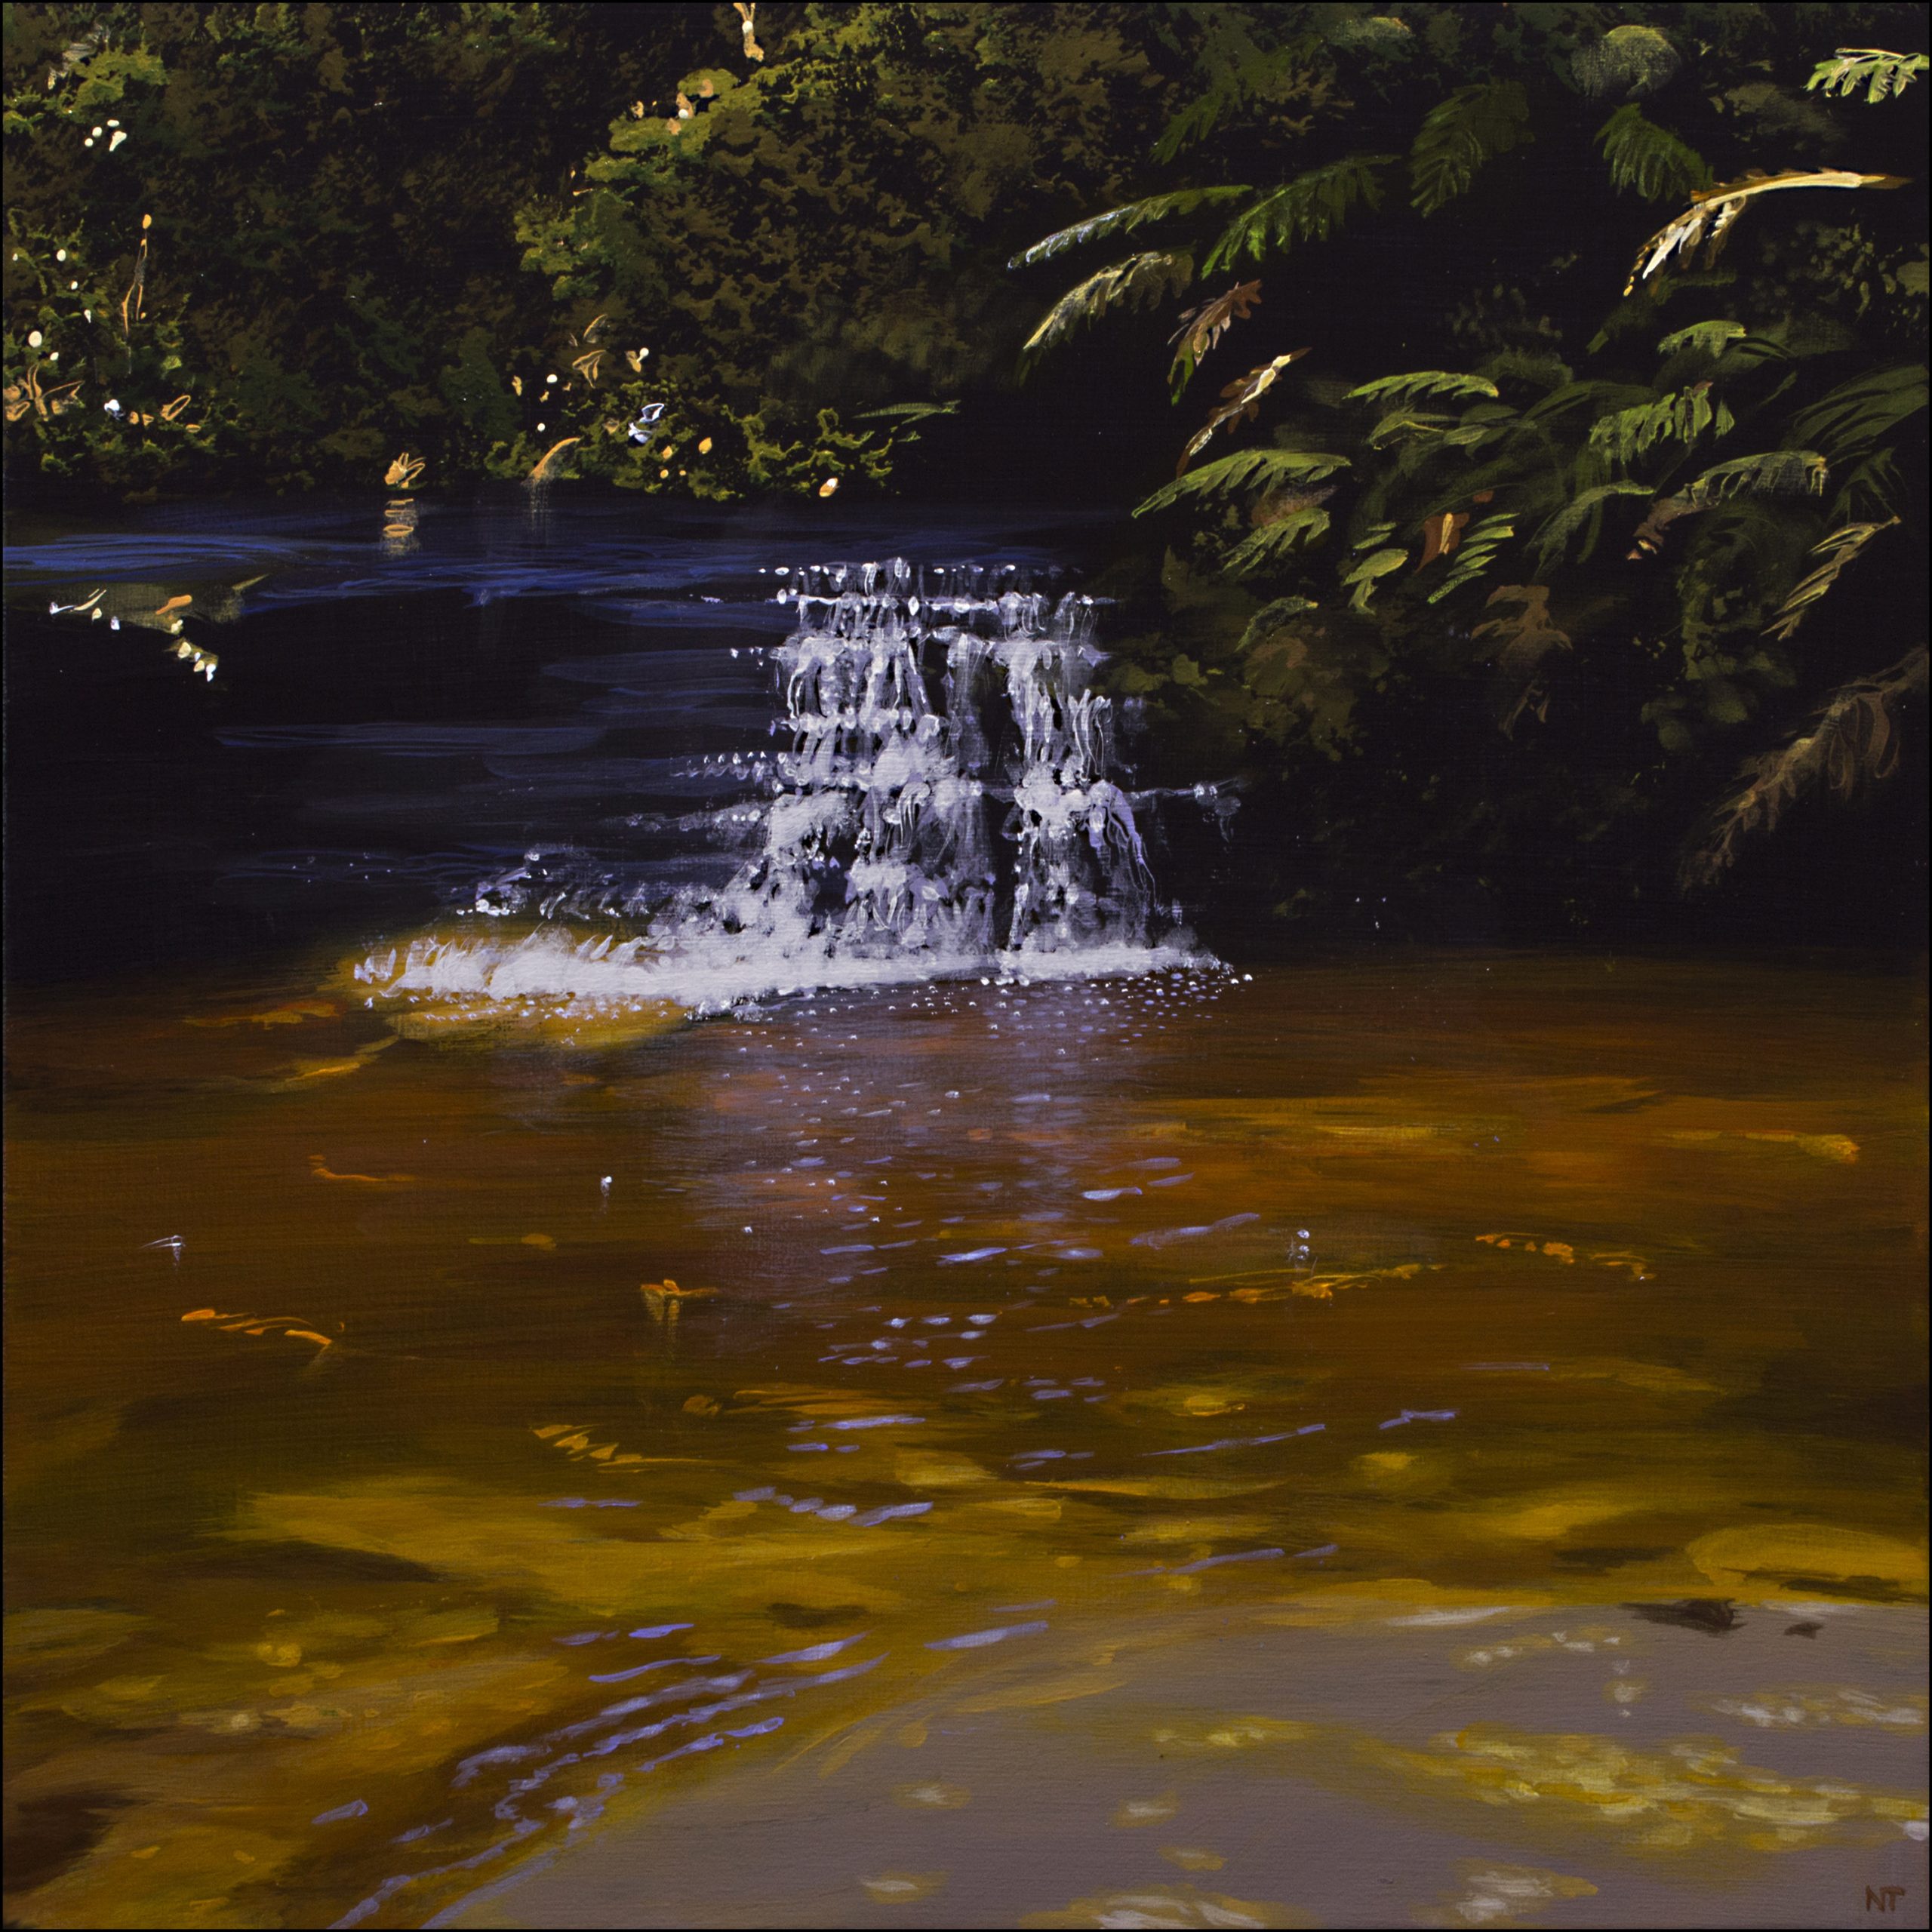 Neil Taylor 'Cataract Creek' acrylic on canvas 45 x 45cm $3,900 SOLD